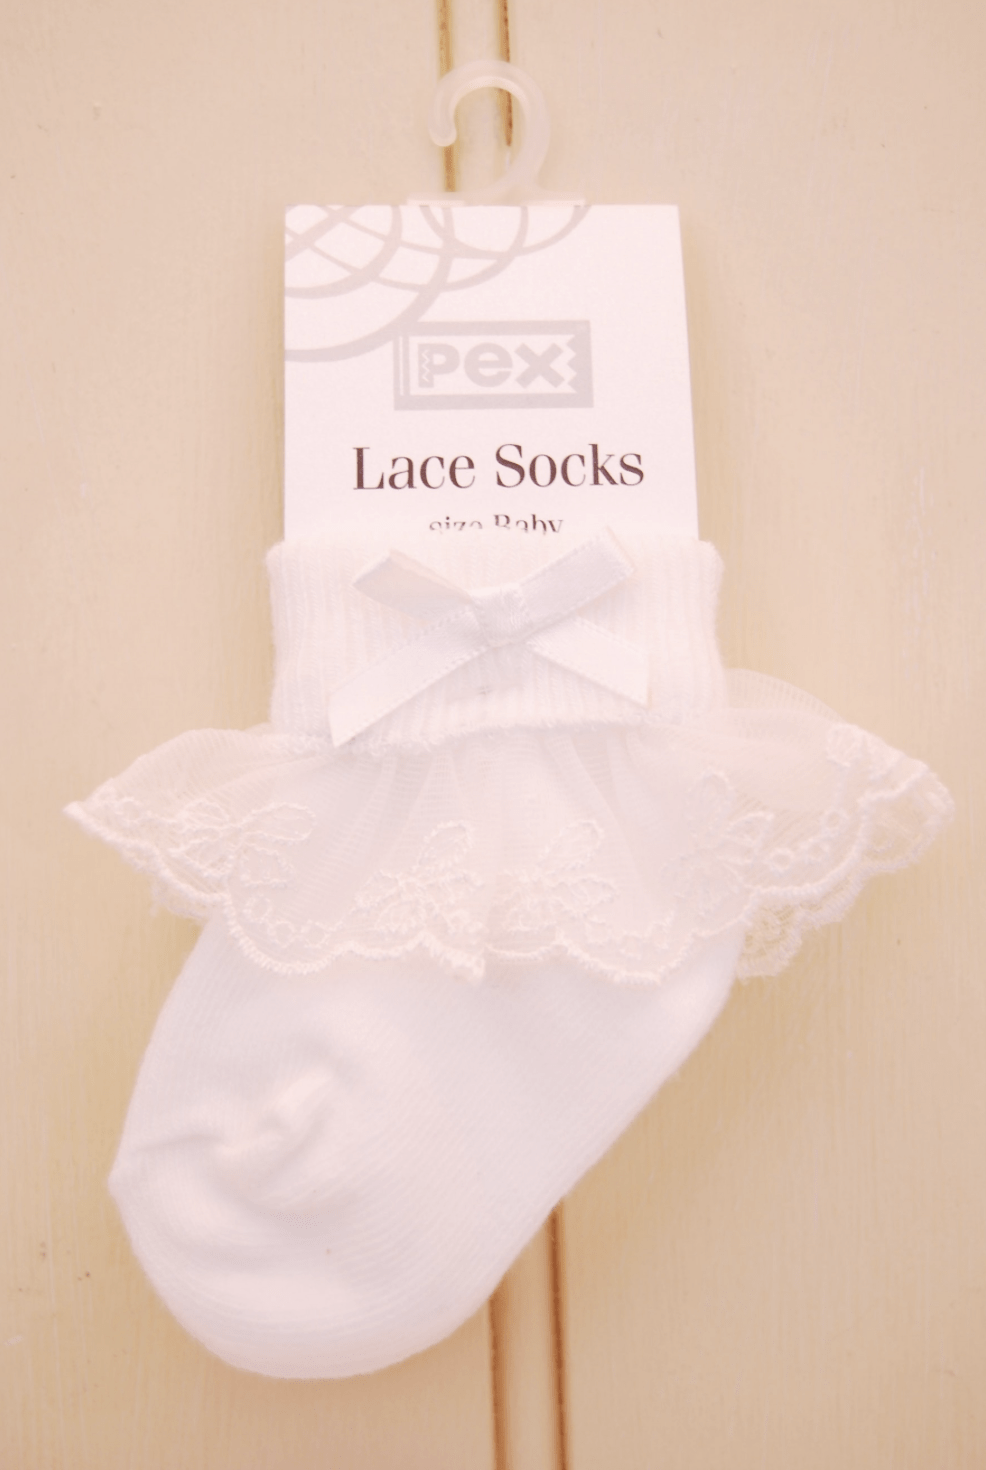 Pex frilly lace socks - Pex